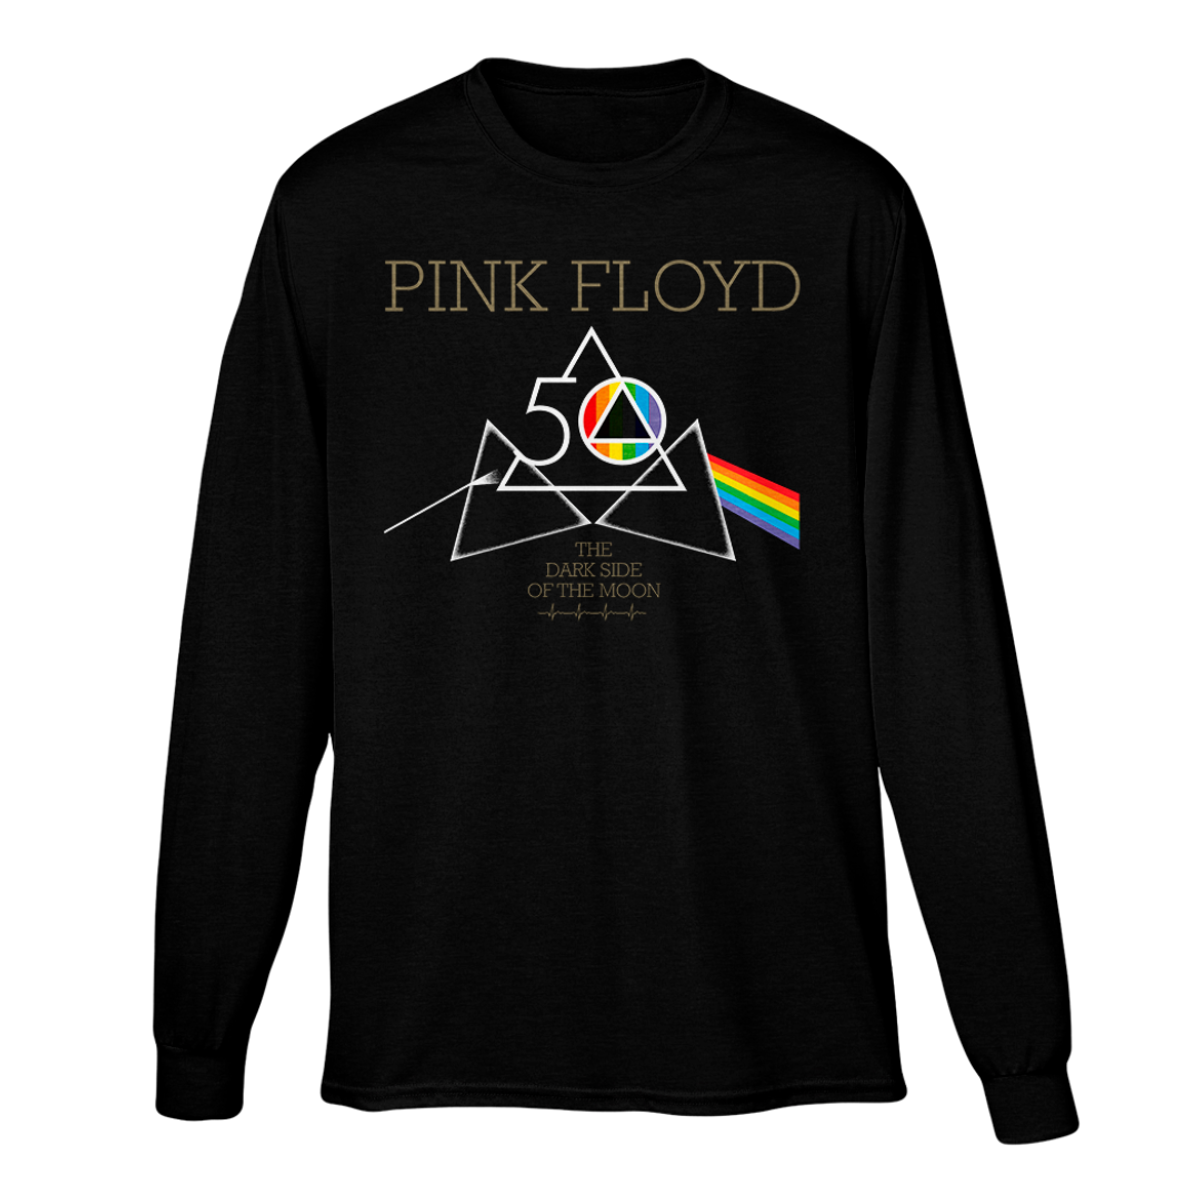 The Dark Side Of The Moon 50th Anniversary Longsleeve - Pink Floyd